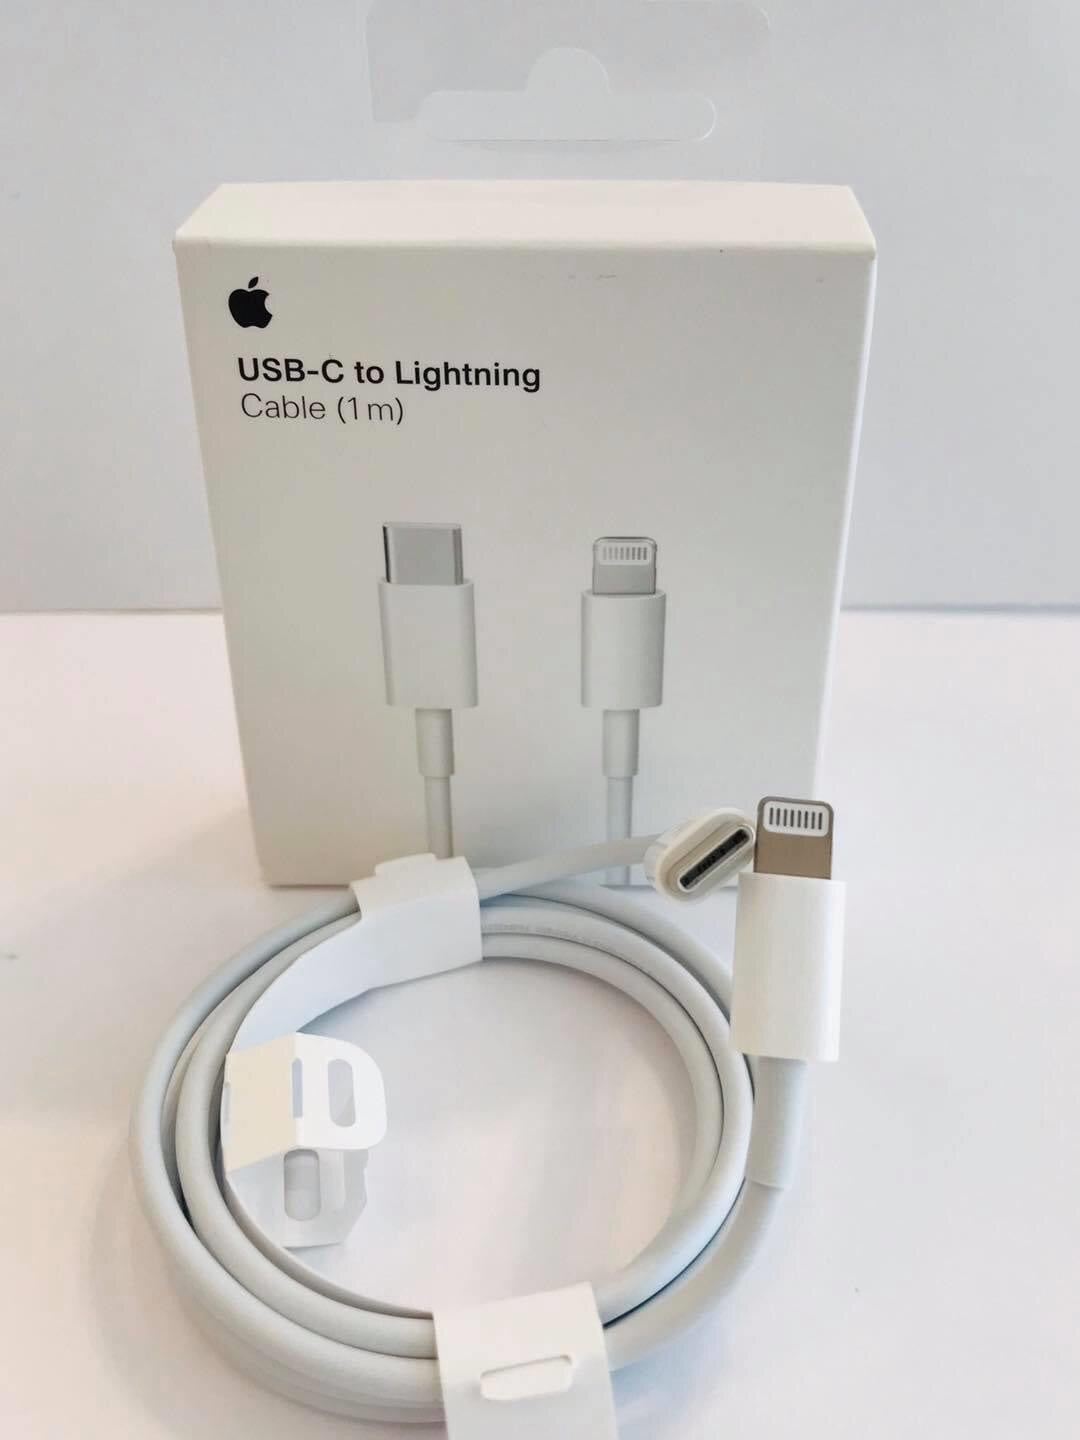 i990 Apple Original USB-C to Lightning Cable (used)